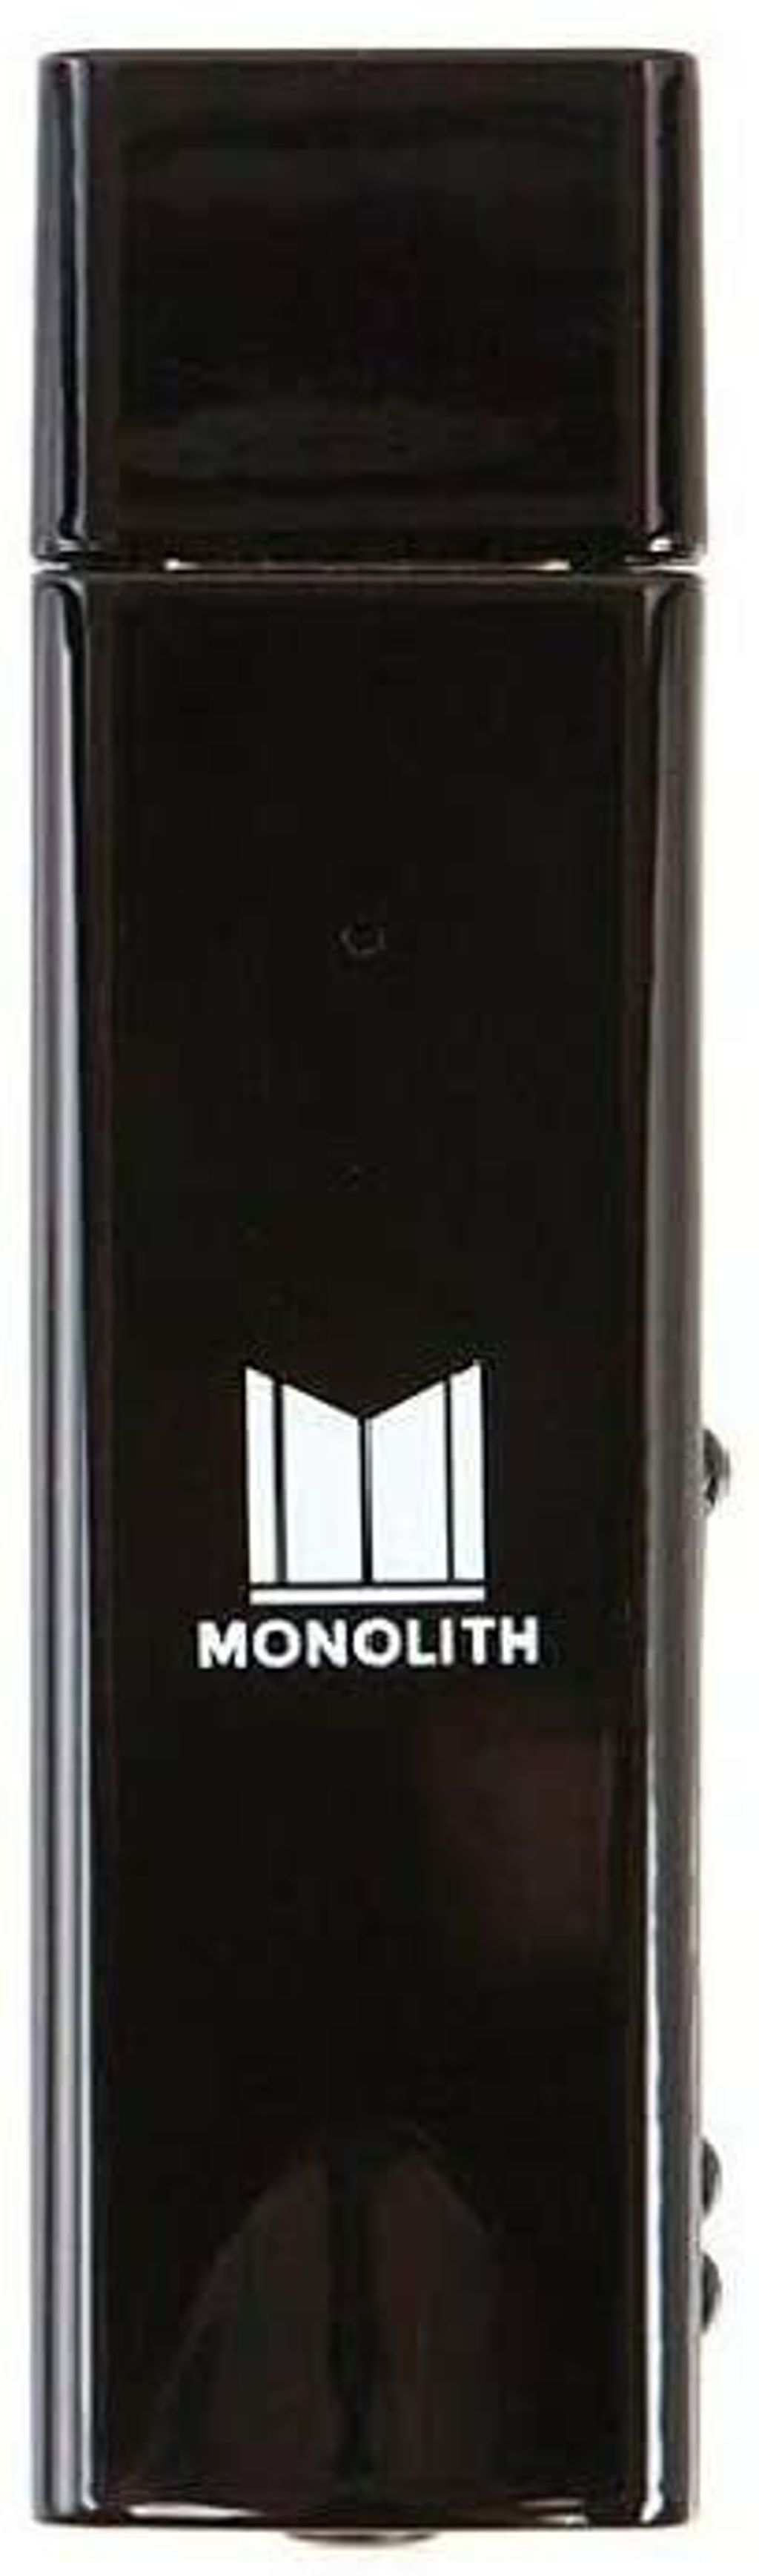 Monoprice by Monolith USB DAC Amplifier.jpg